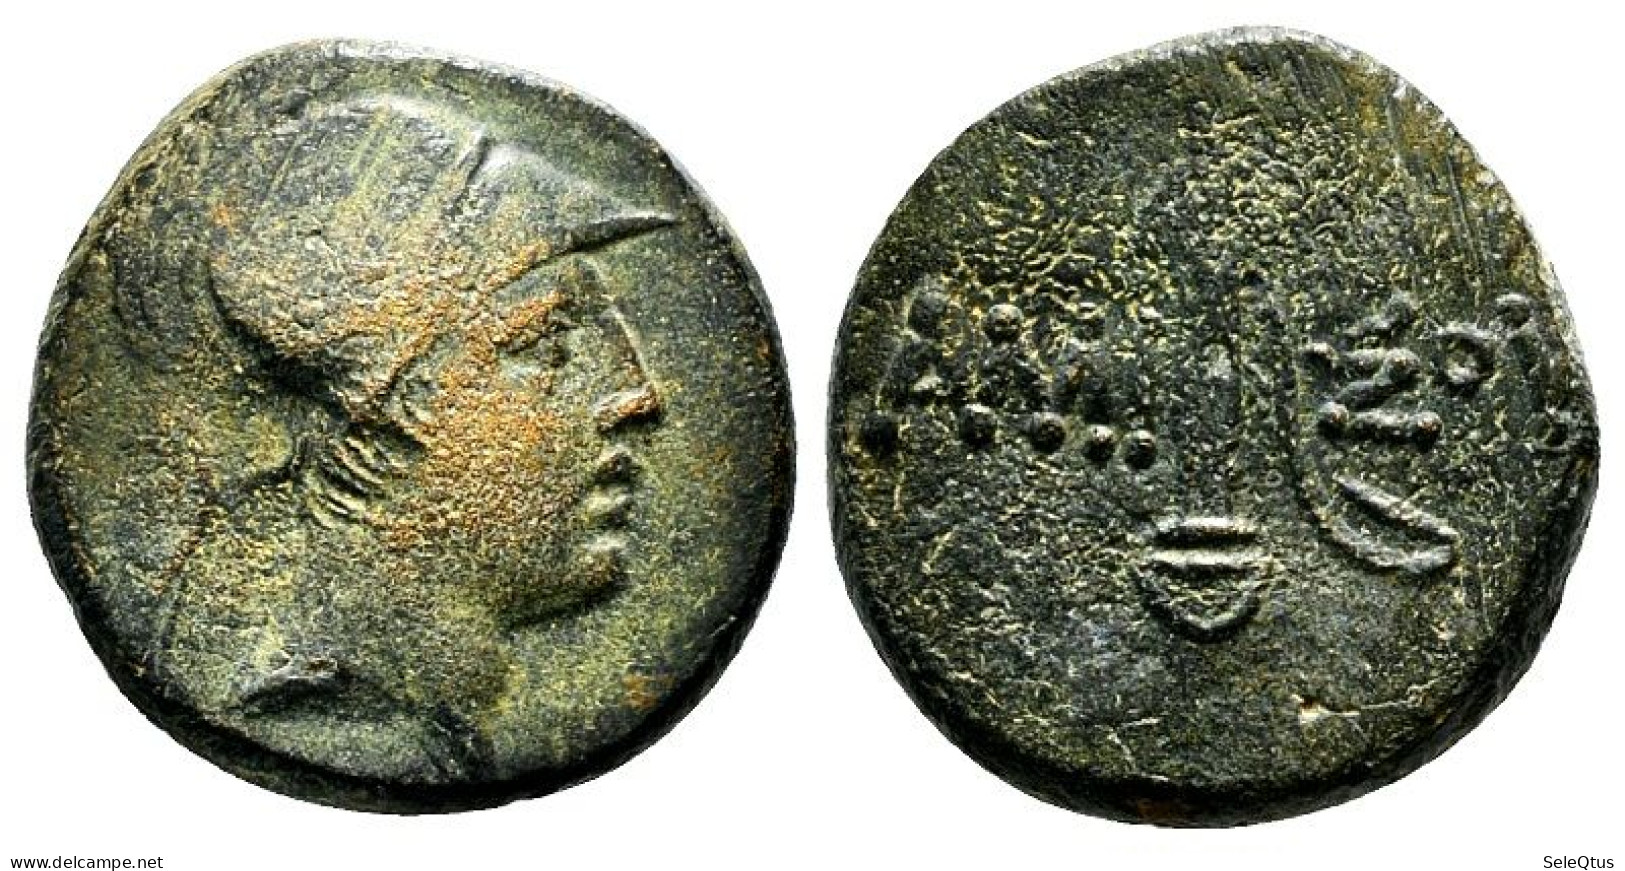 Monedas Antiguas - Ancient Coins (00139-010-0018) - Greek